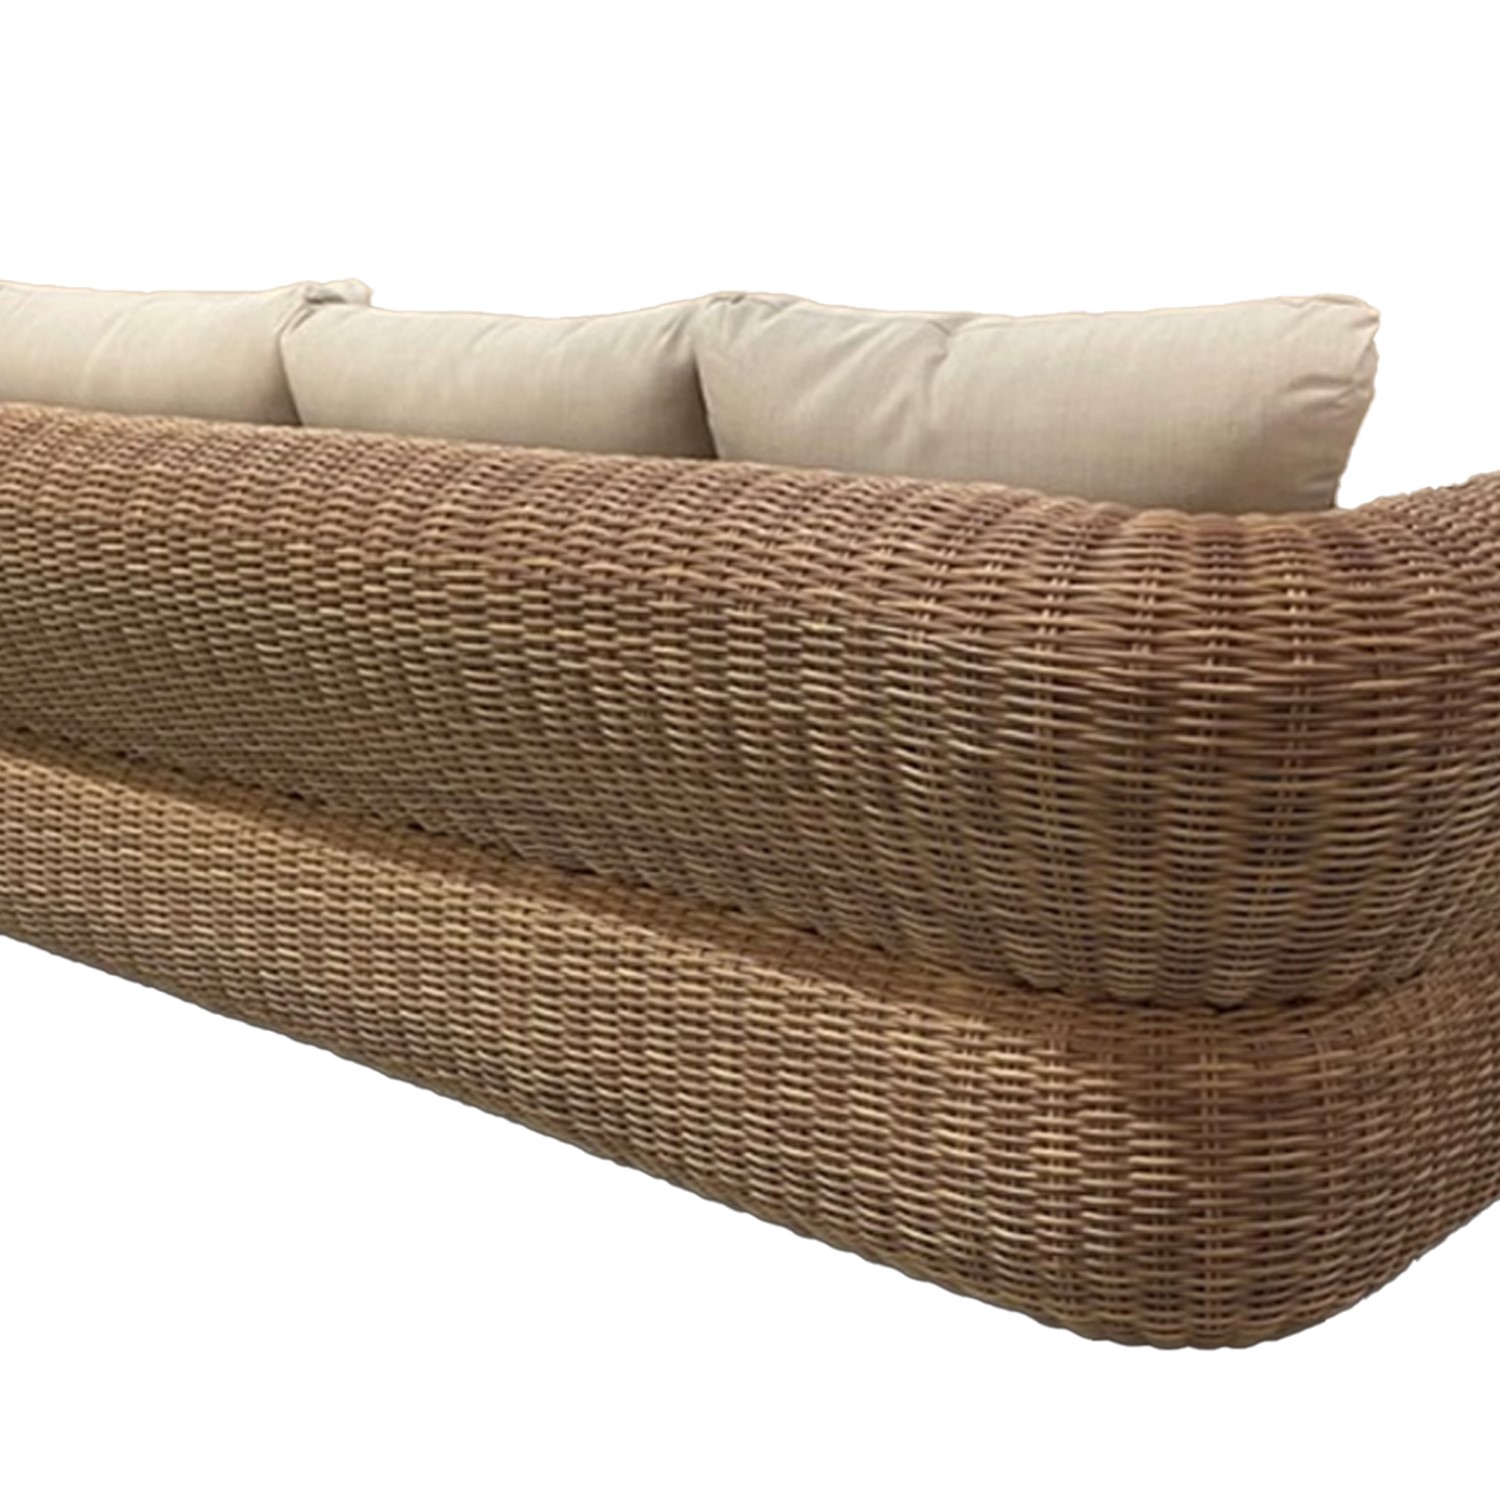 FTR185 Garden Sofa Set Features